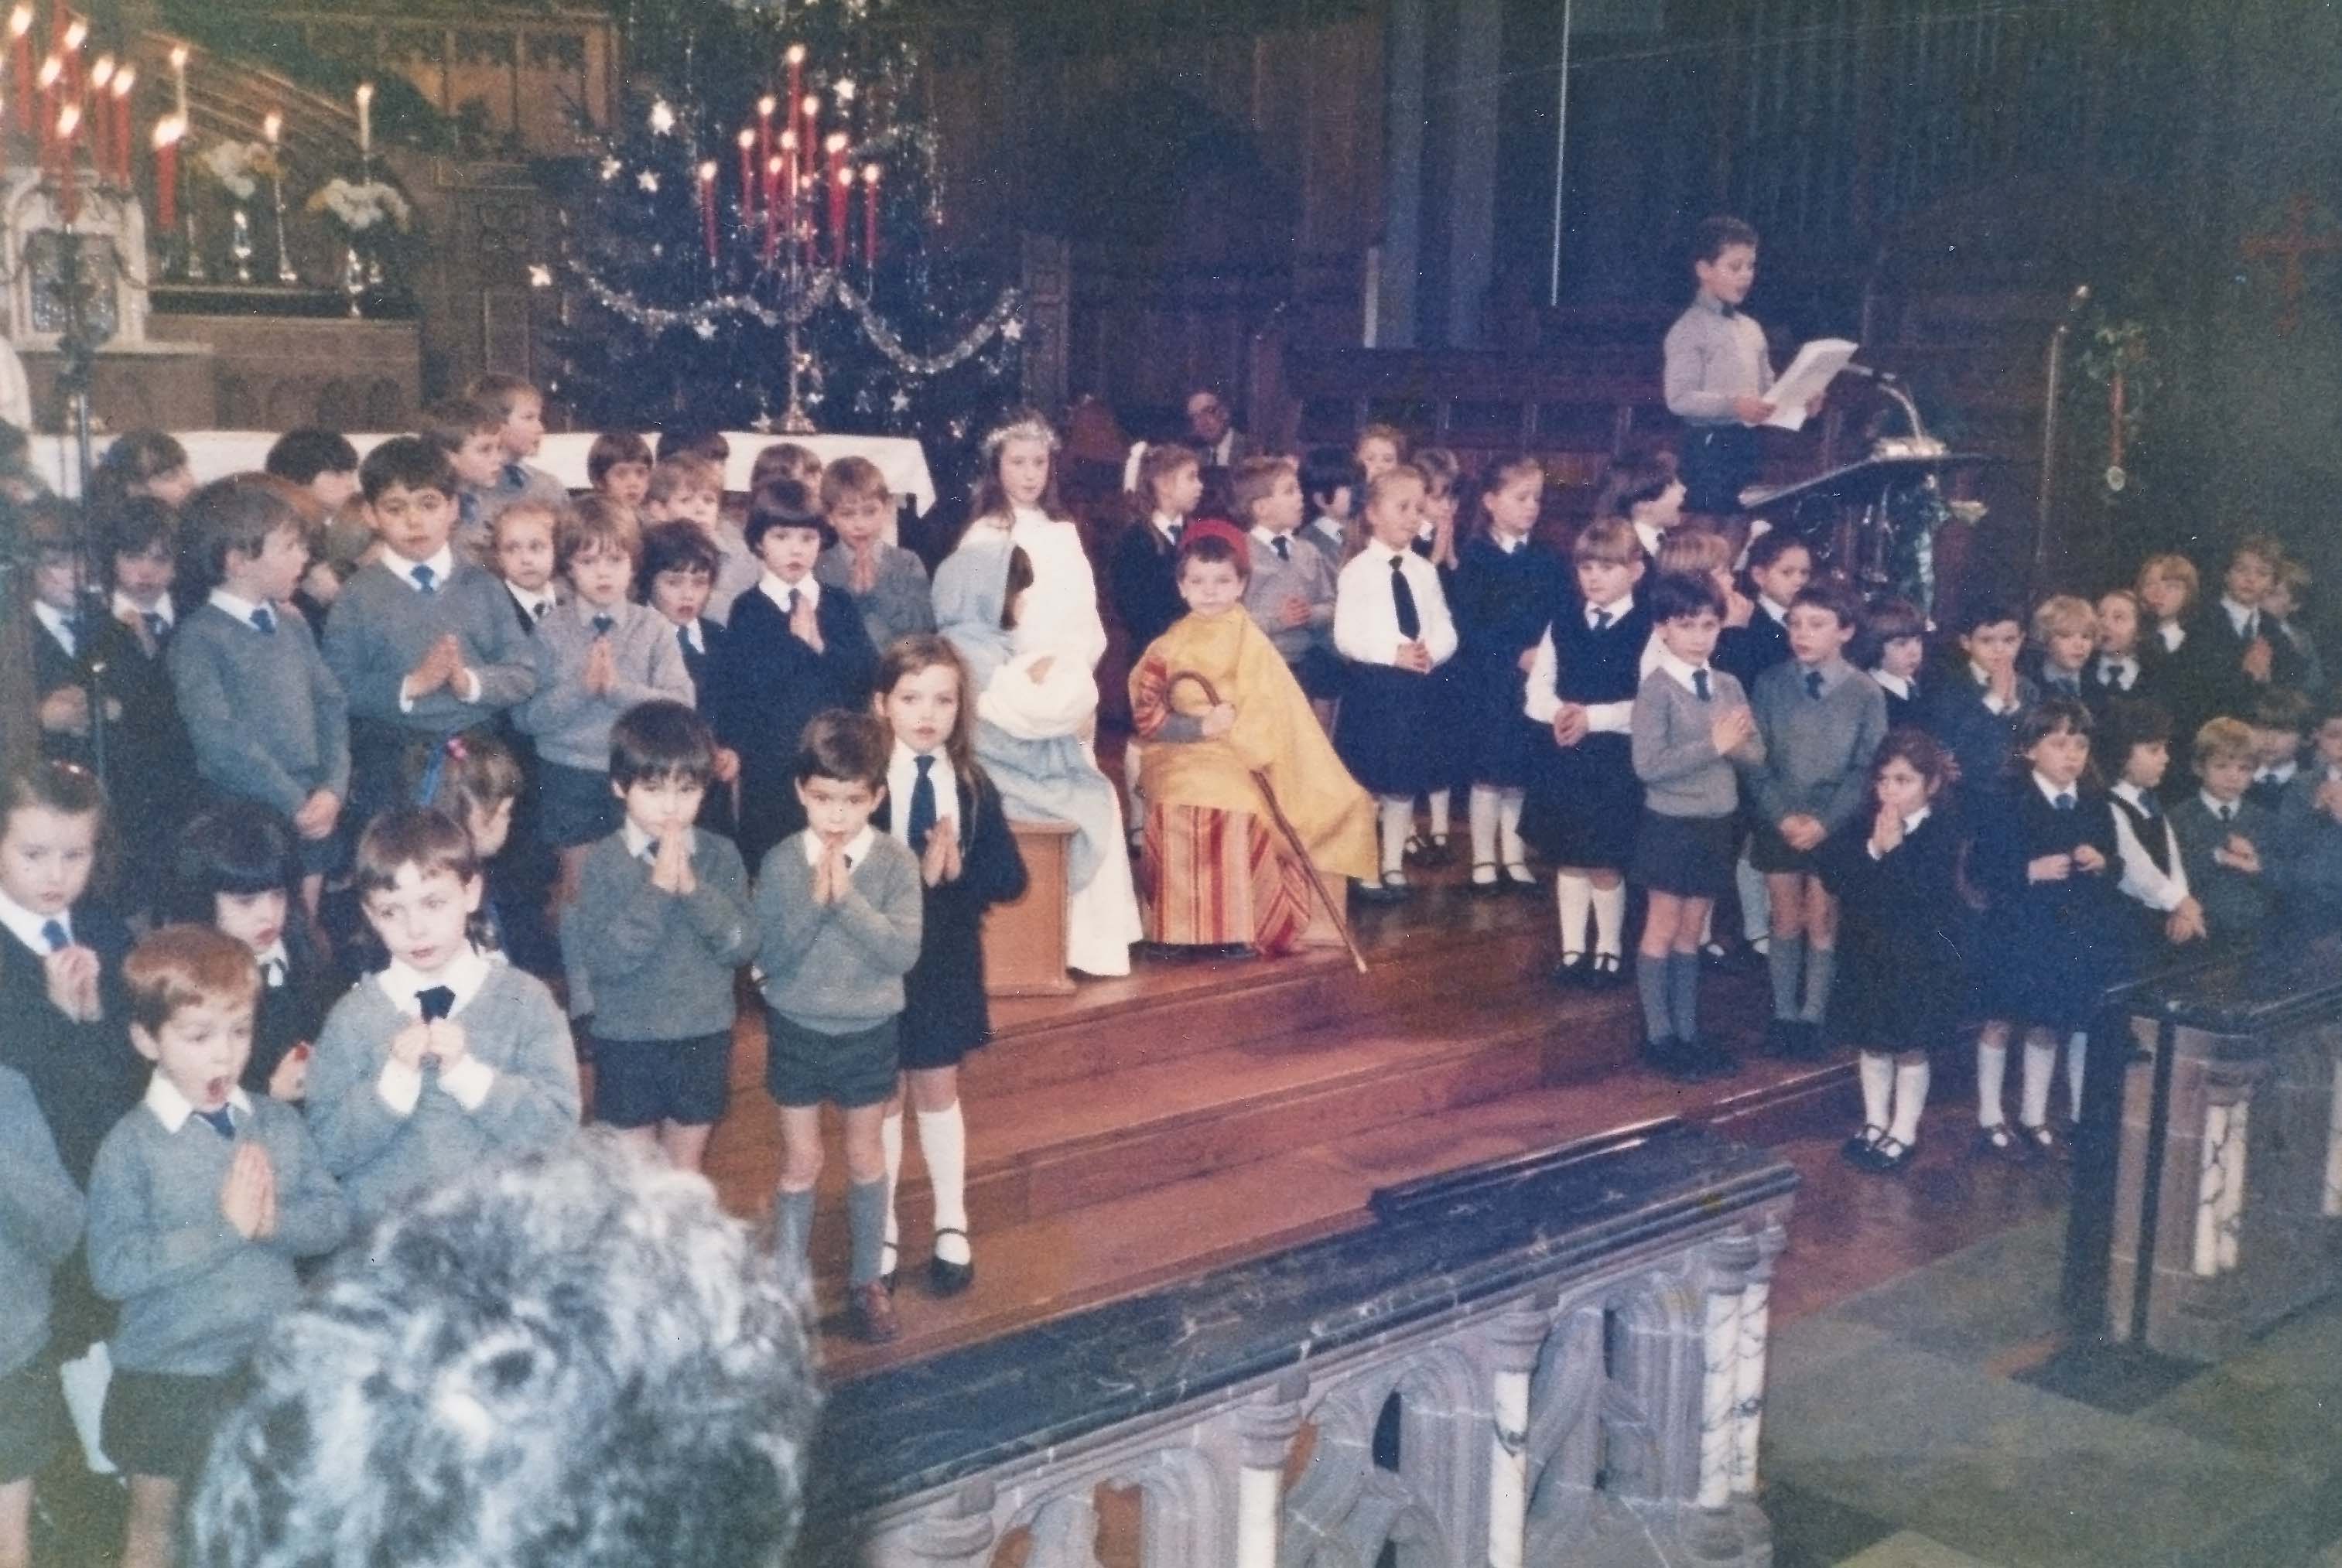 Primary schoolchildren at Christmas